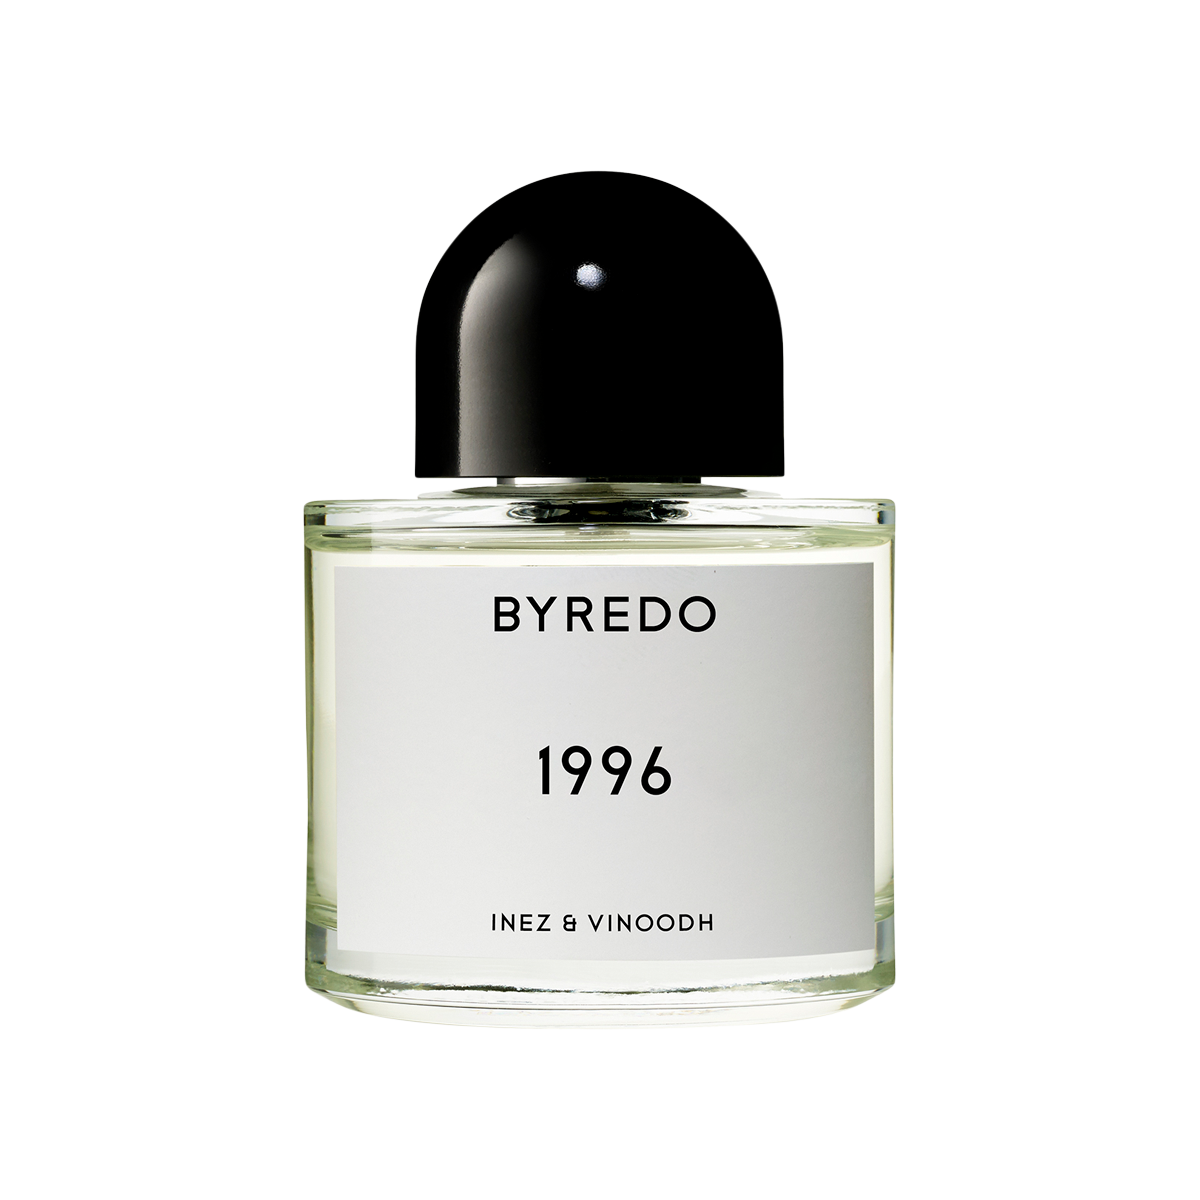 Byredo - 1996 Eau de Parfum